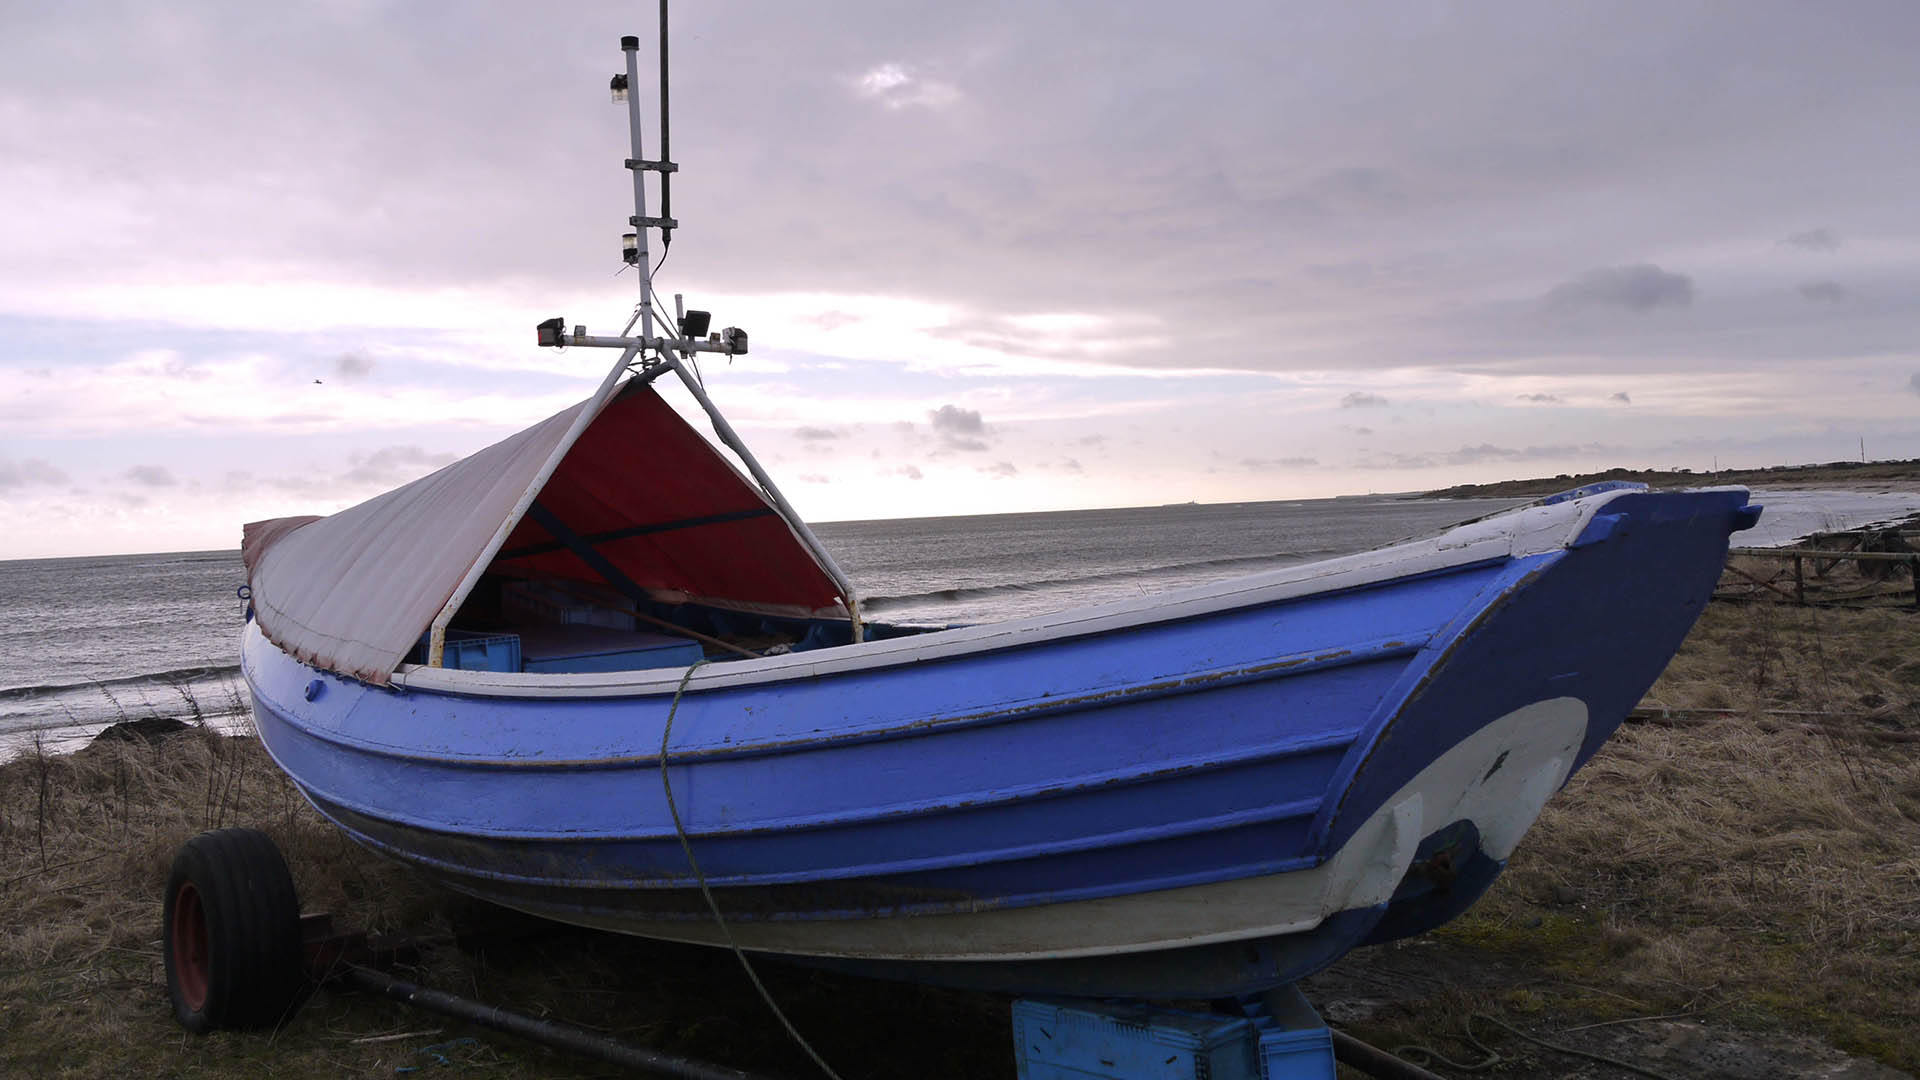 Inshore fishing boat models in demand